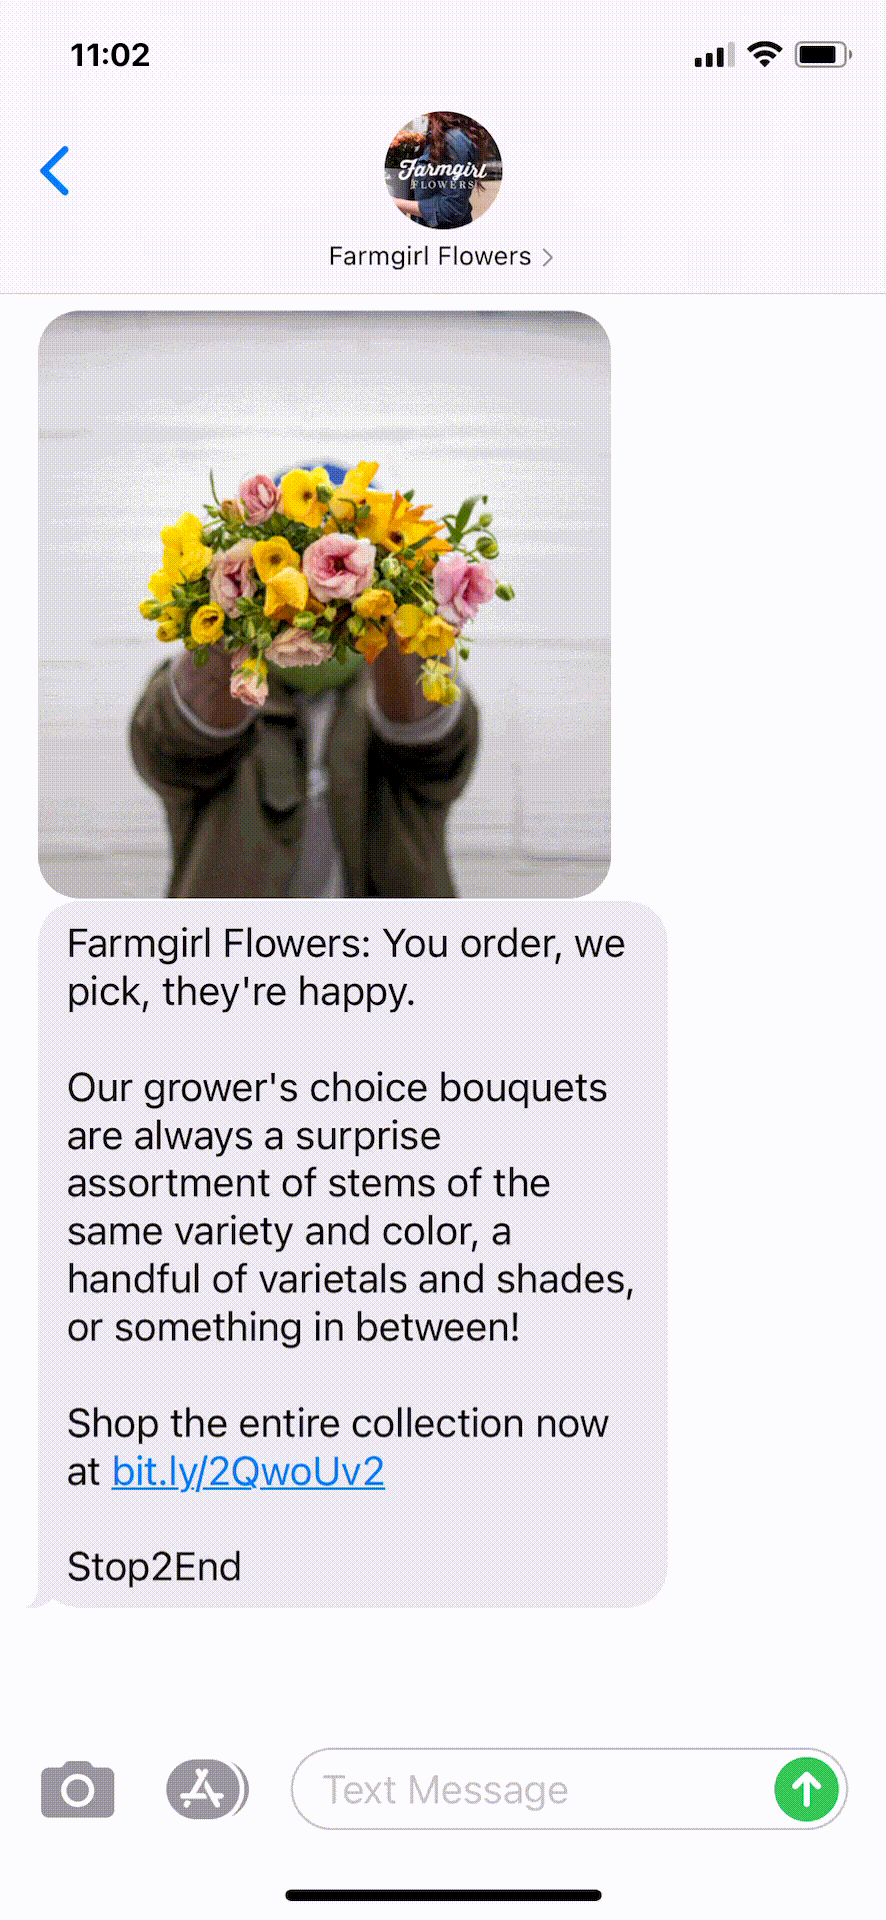 Farmgirl-Flowers-Text-Message-Marketing-Example-03.25.2021